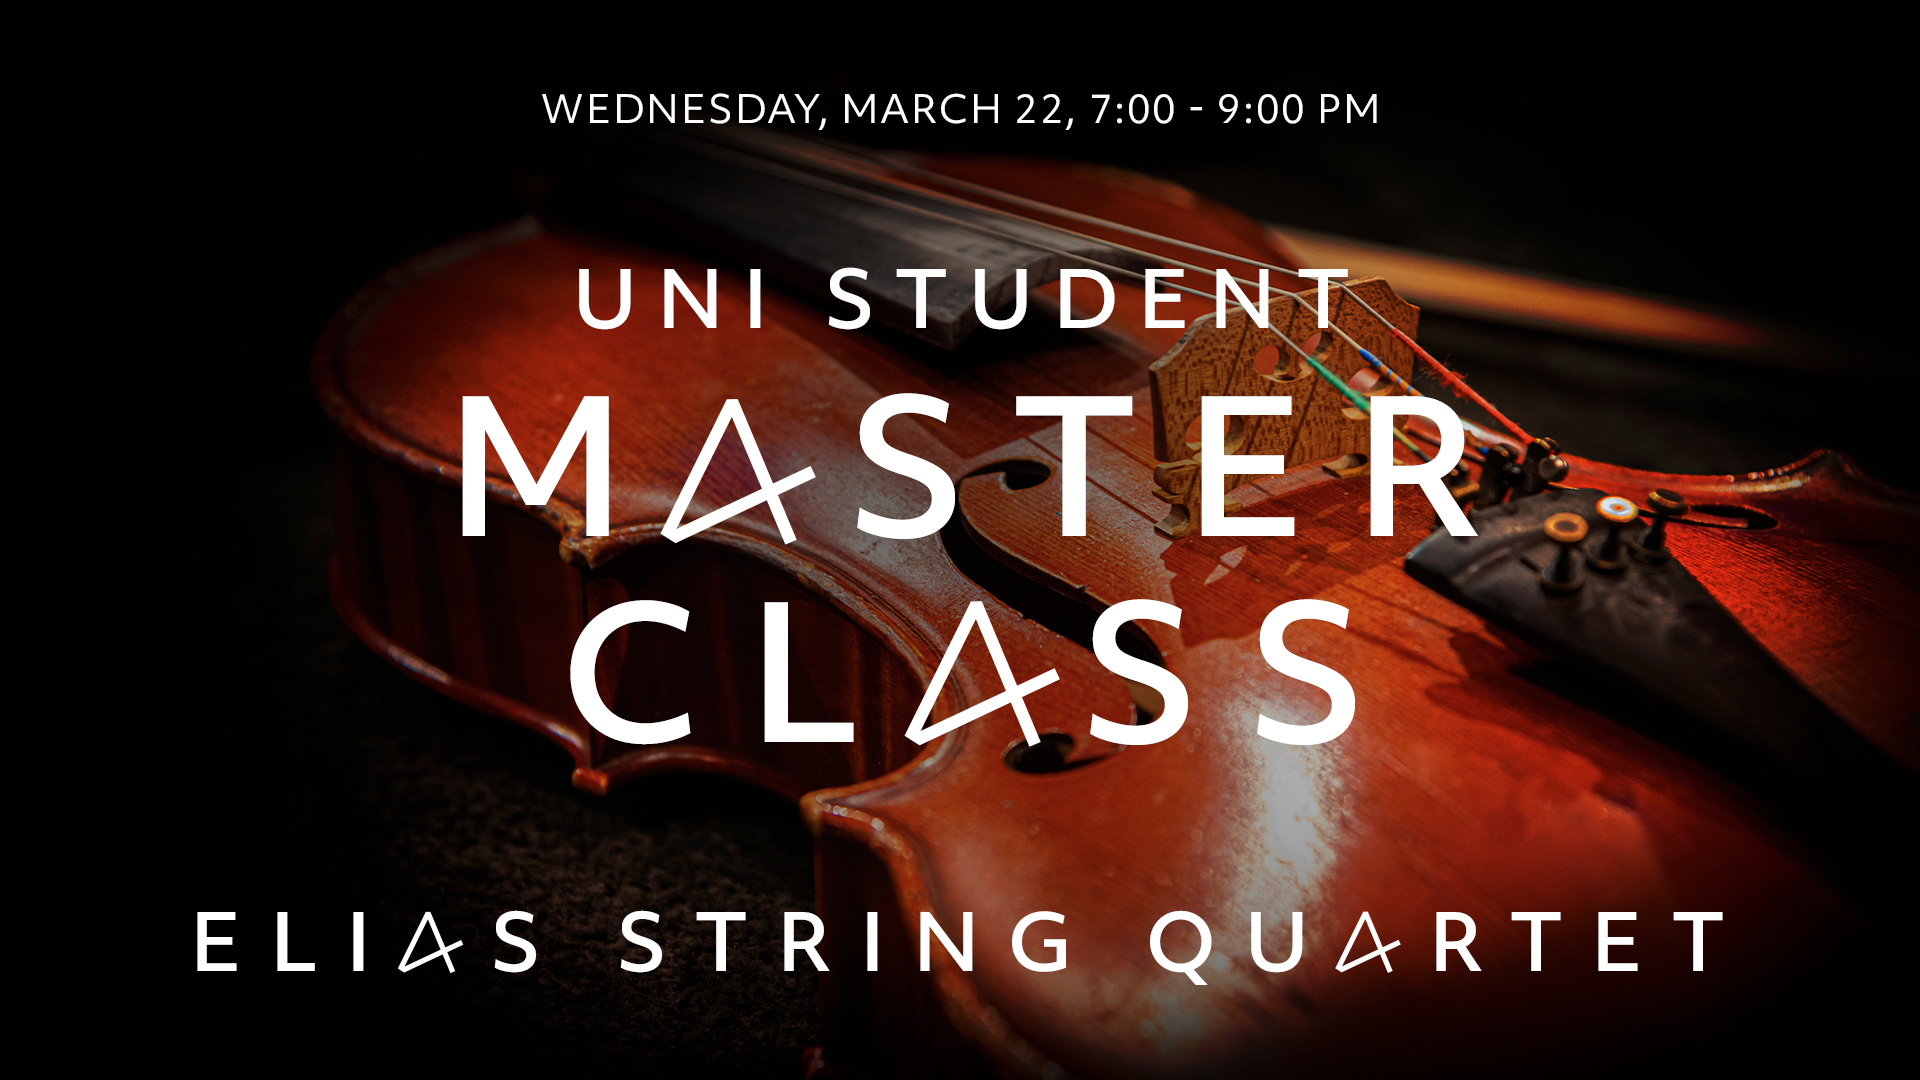 UNI Student Masterclass with Elias String Quartet